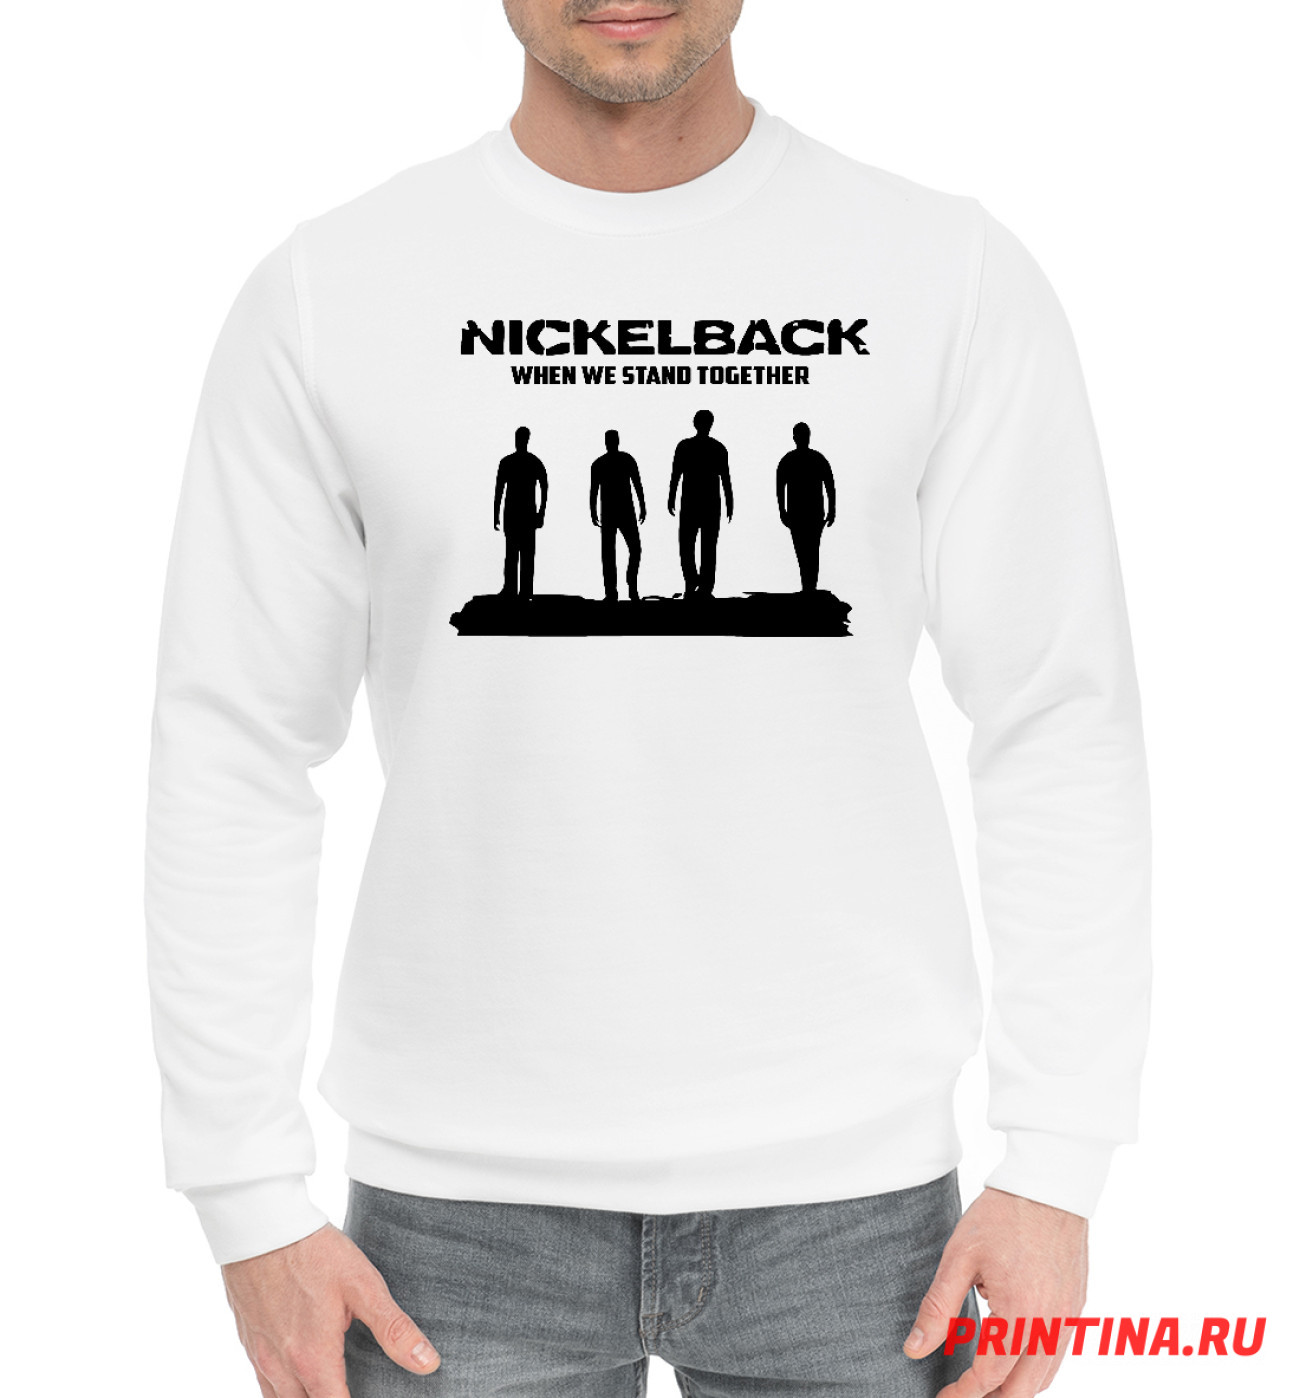 Мужской Хлопковый свитшот Nickelback, артикул: NIC-103014-hsw-2